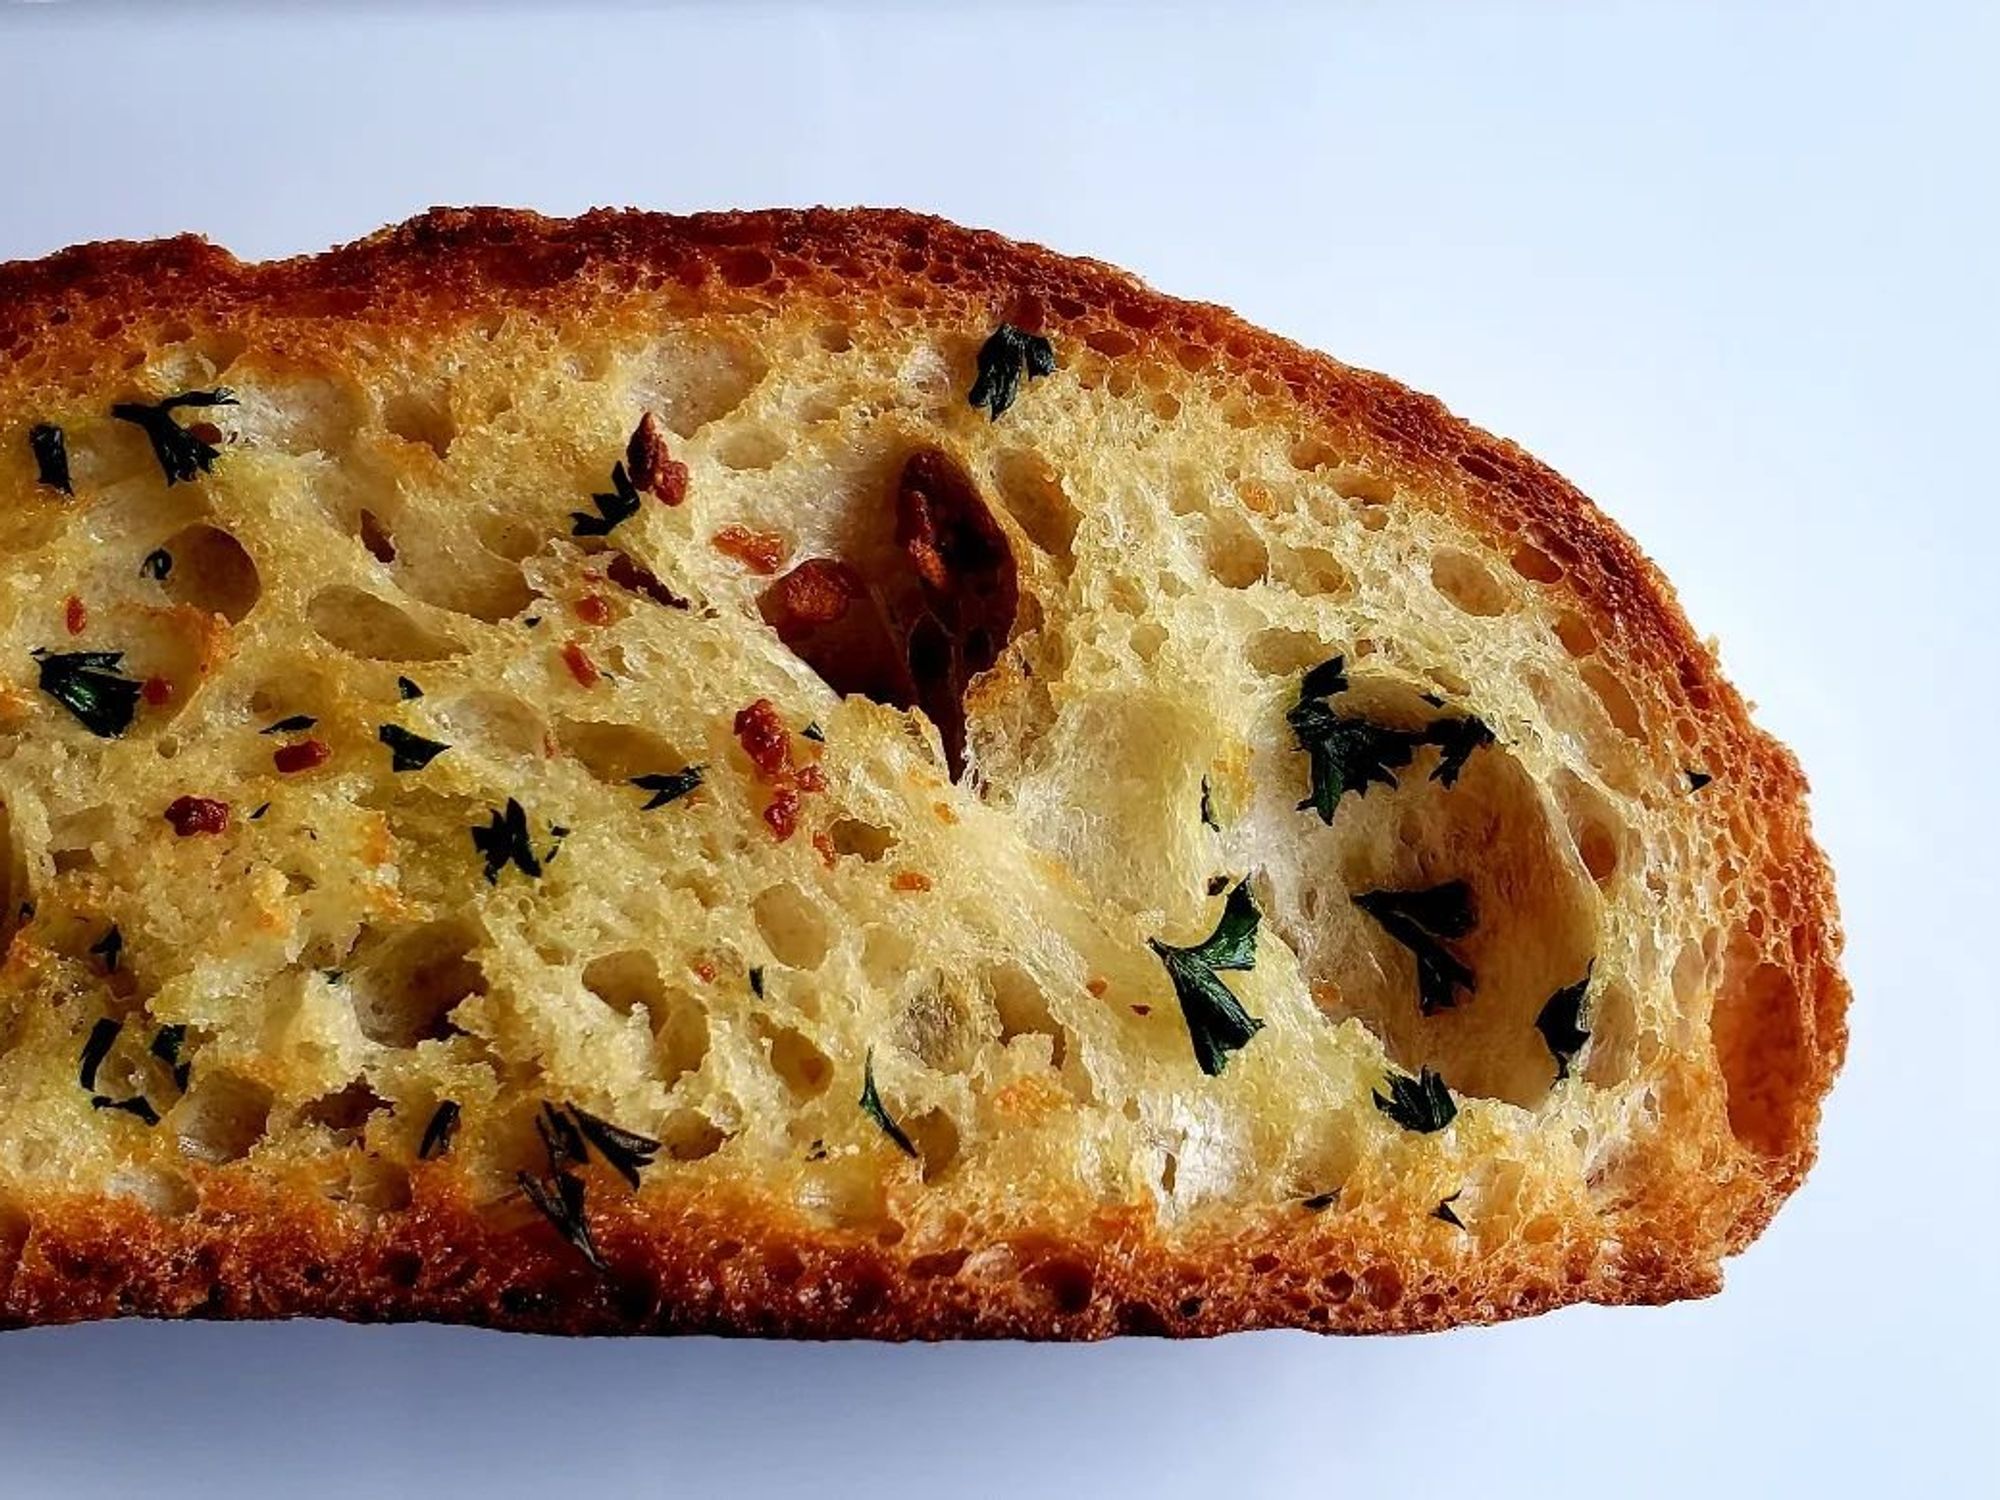 Empire Baking garlic bread